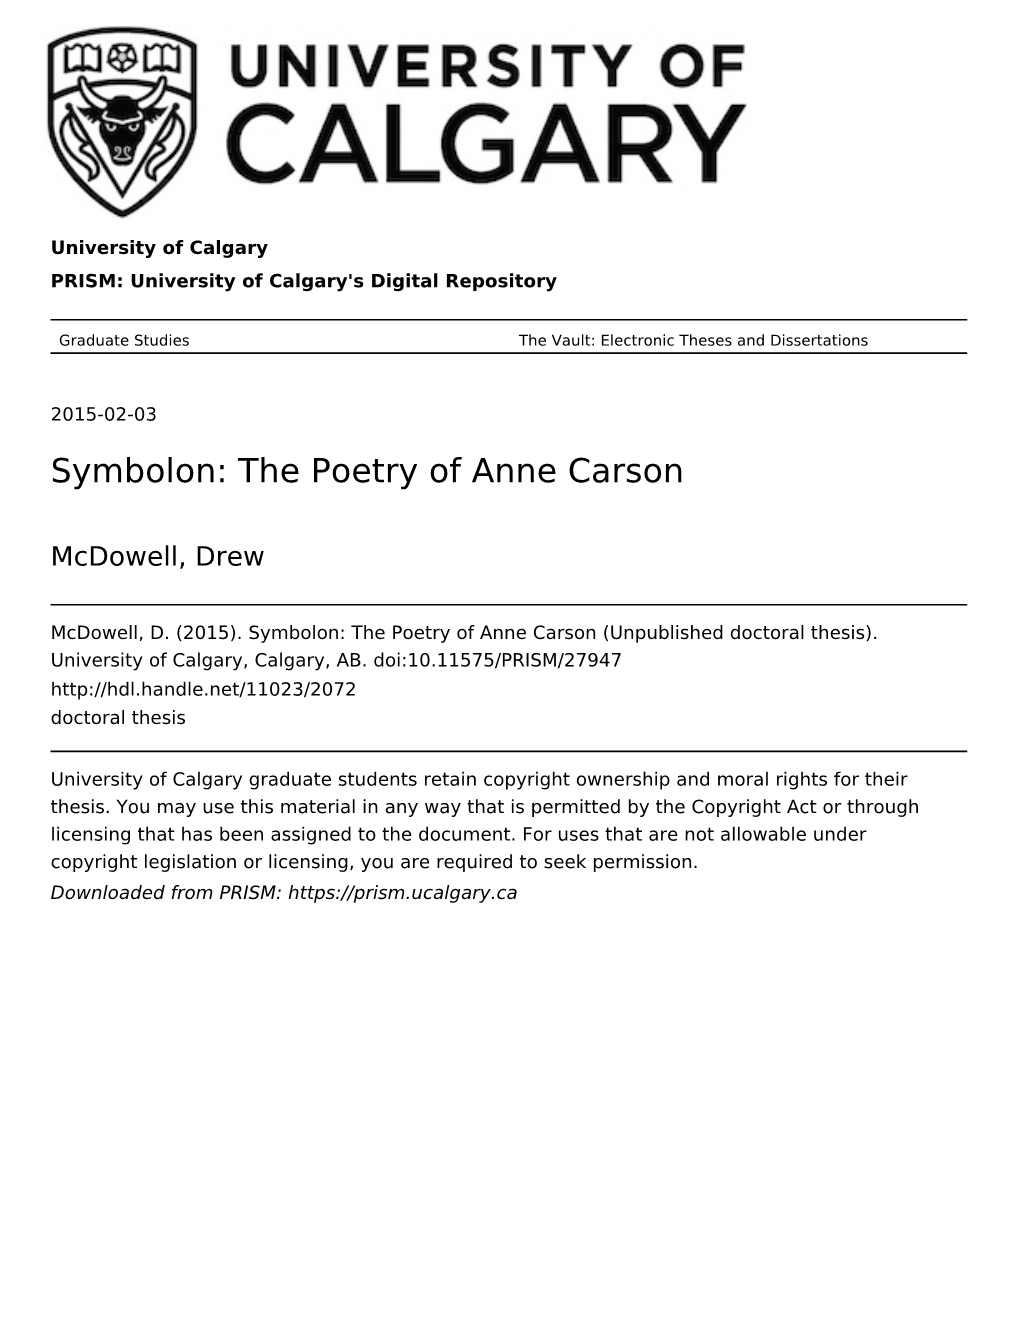 Symbolon: the Poetry of Anne Carson